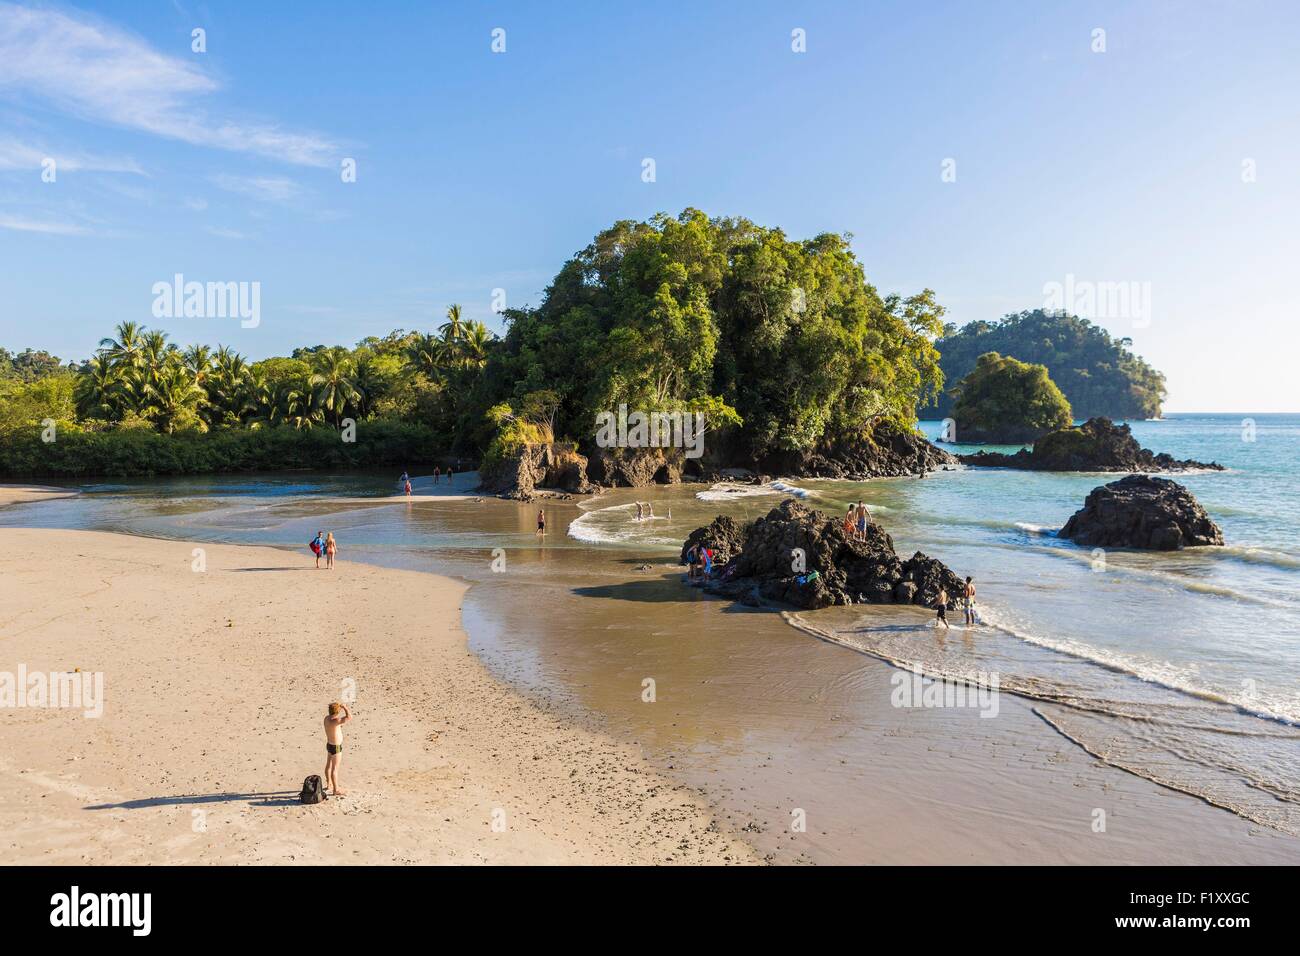 Costa Rica, Puntarenas province, Manuel Antonio Beach Stock Photo